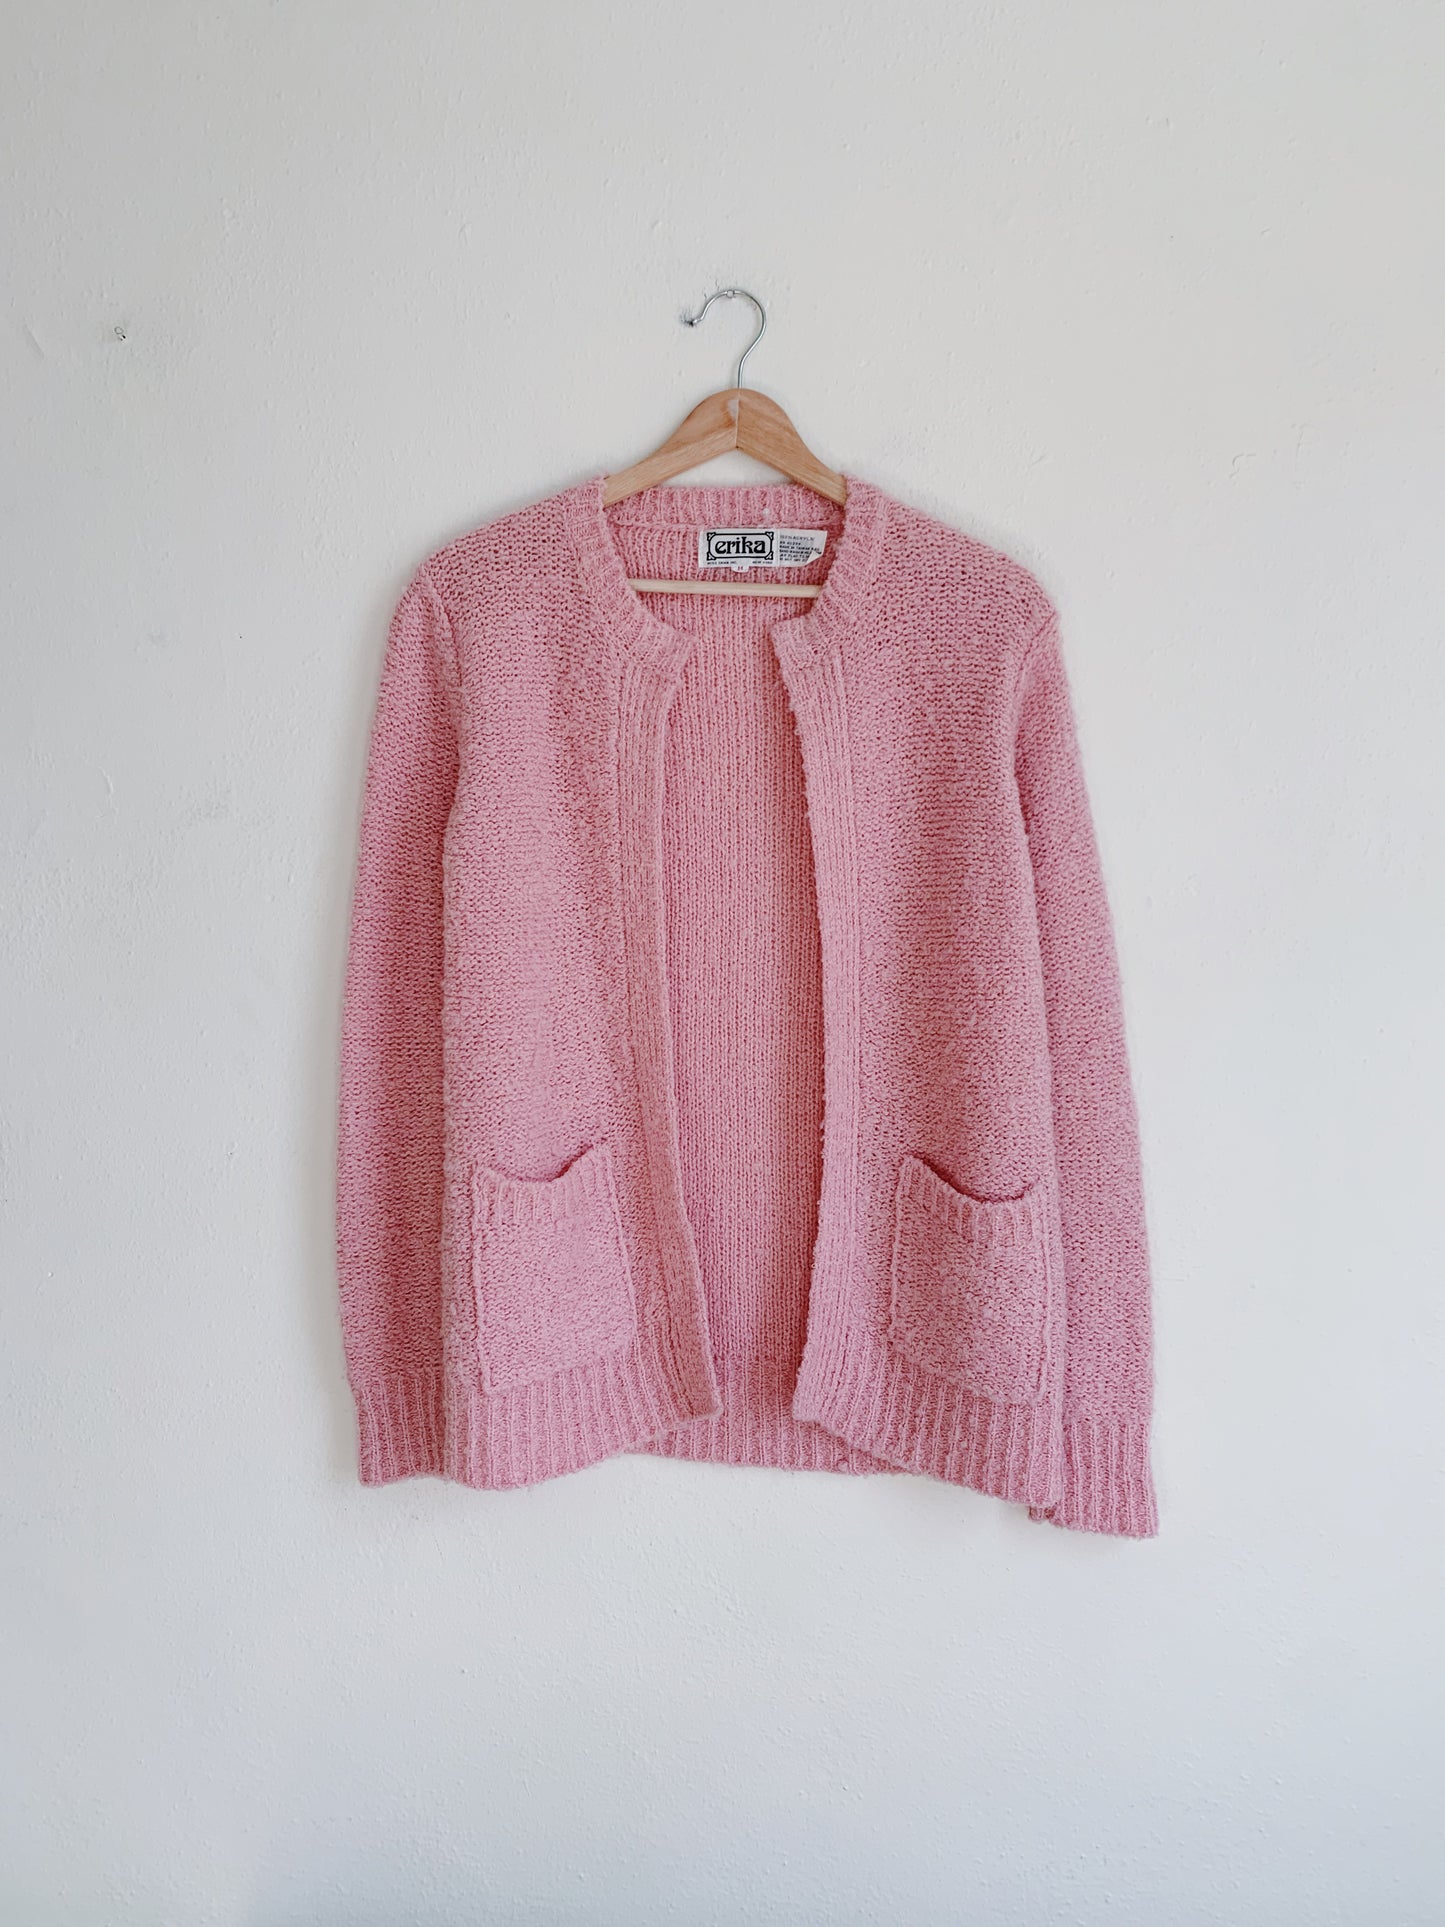 Vintage Pink Cardigan (M)